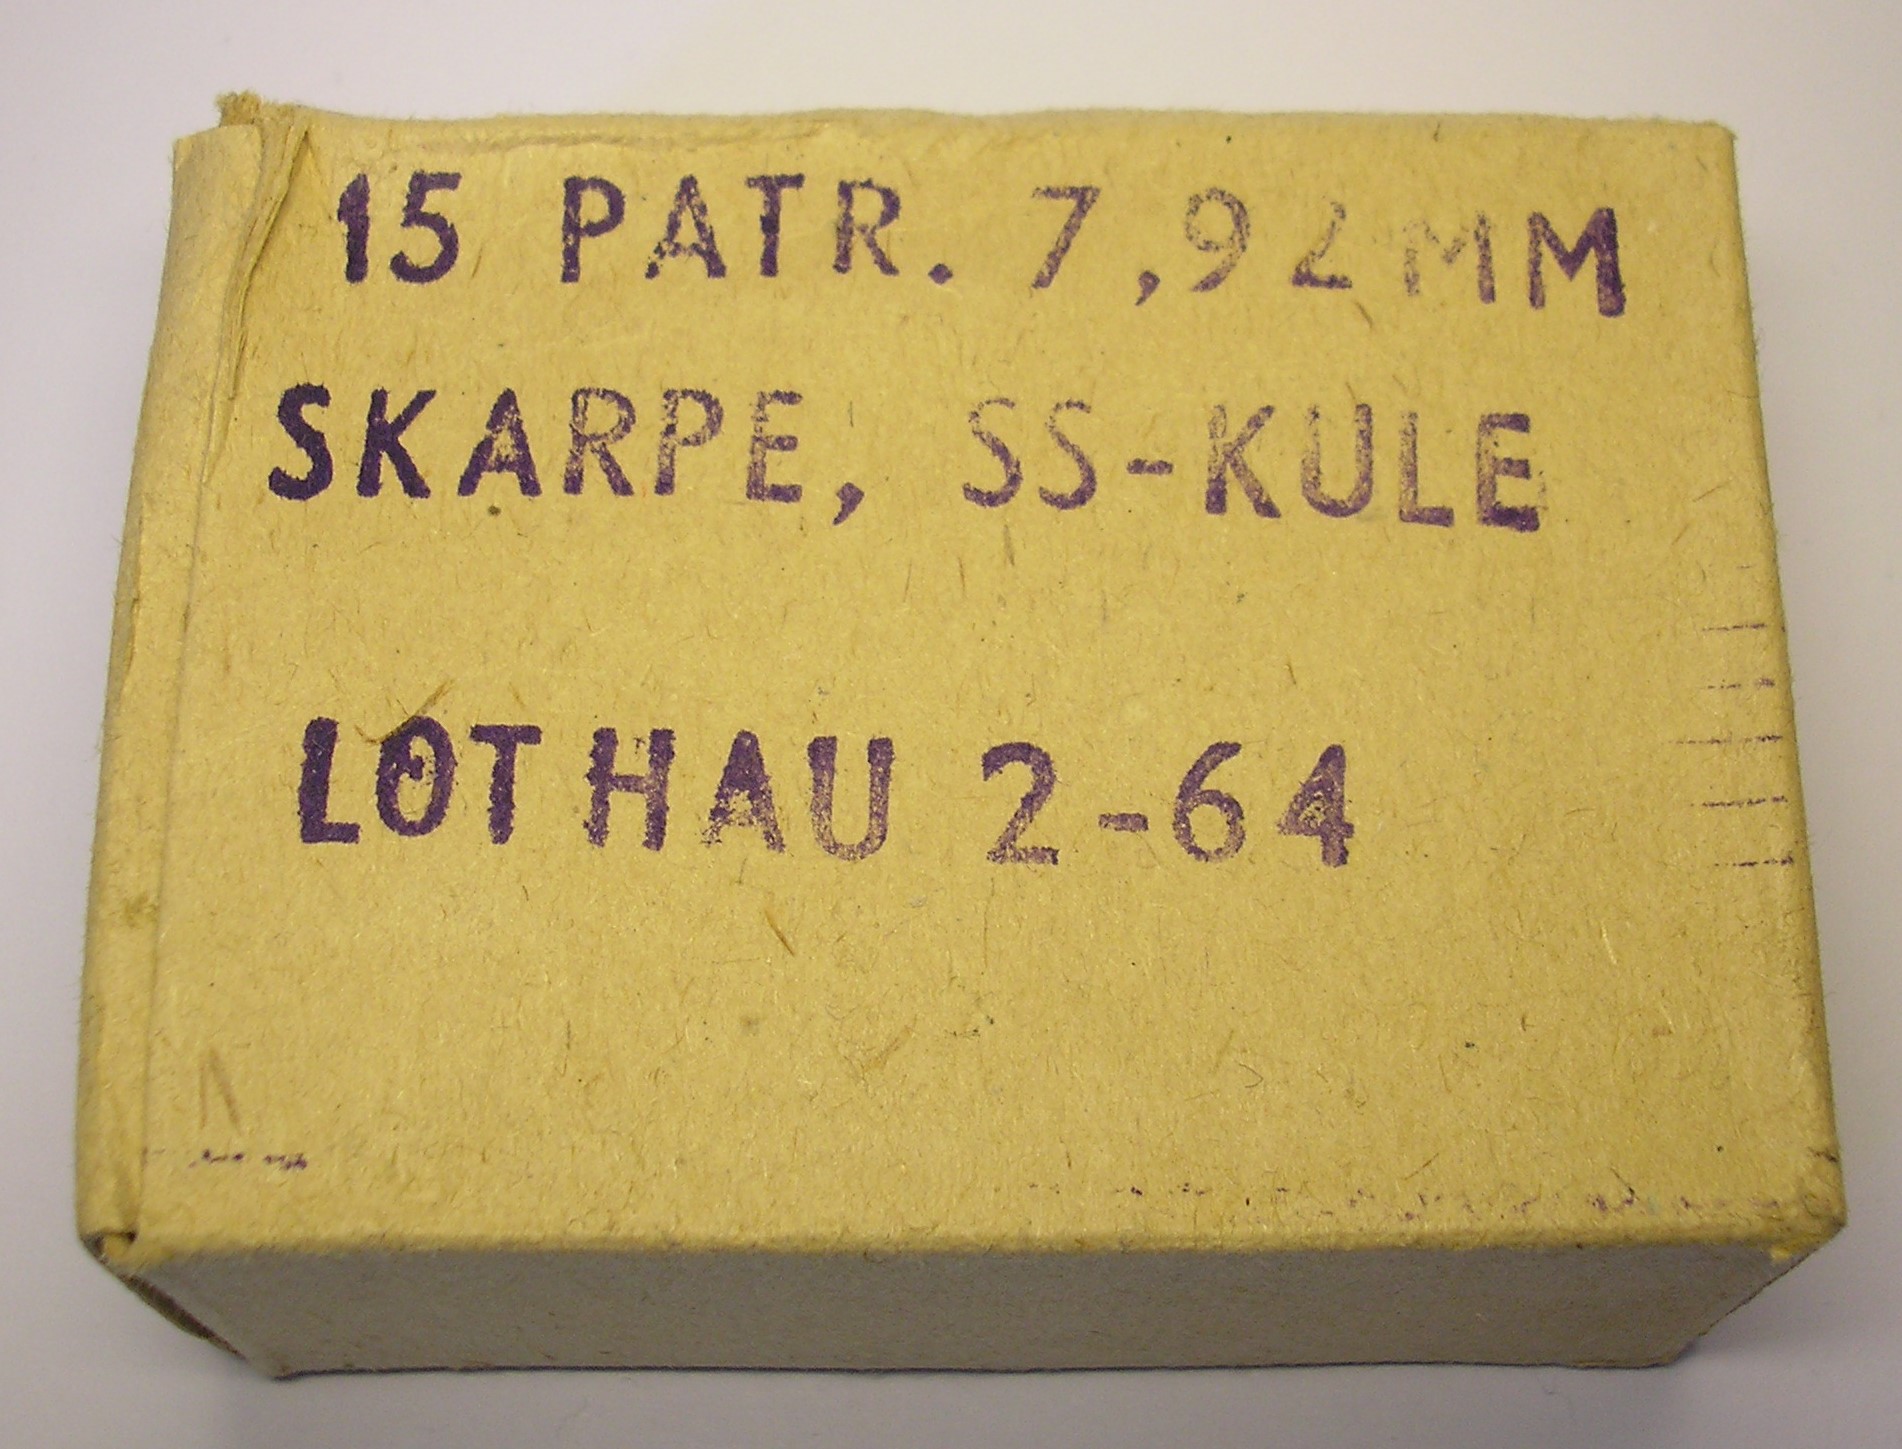 ./ammo/792x57/esker/Eske-792x57-RA-SS-50skudd-LOT-HAU-2-1964-1.JPG